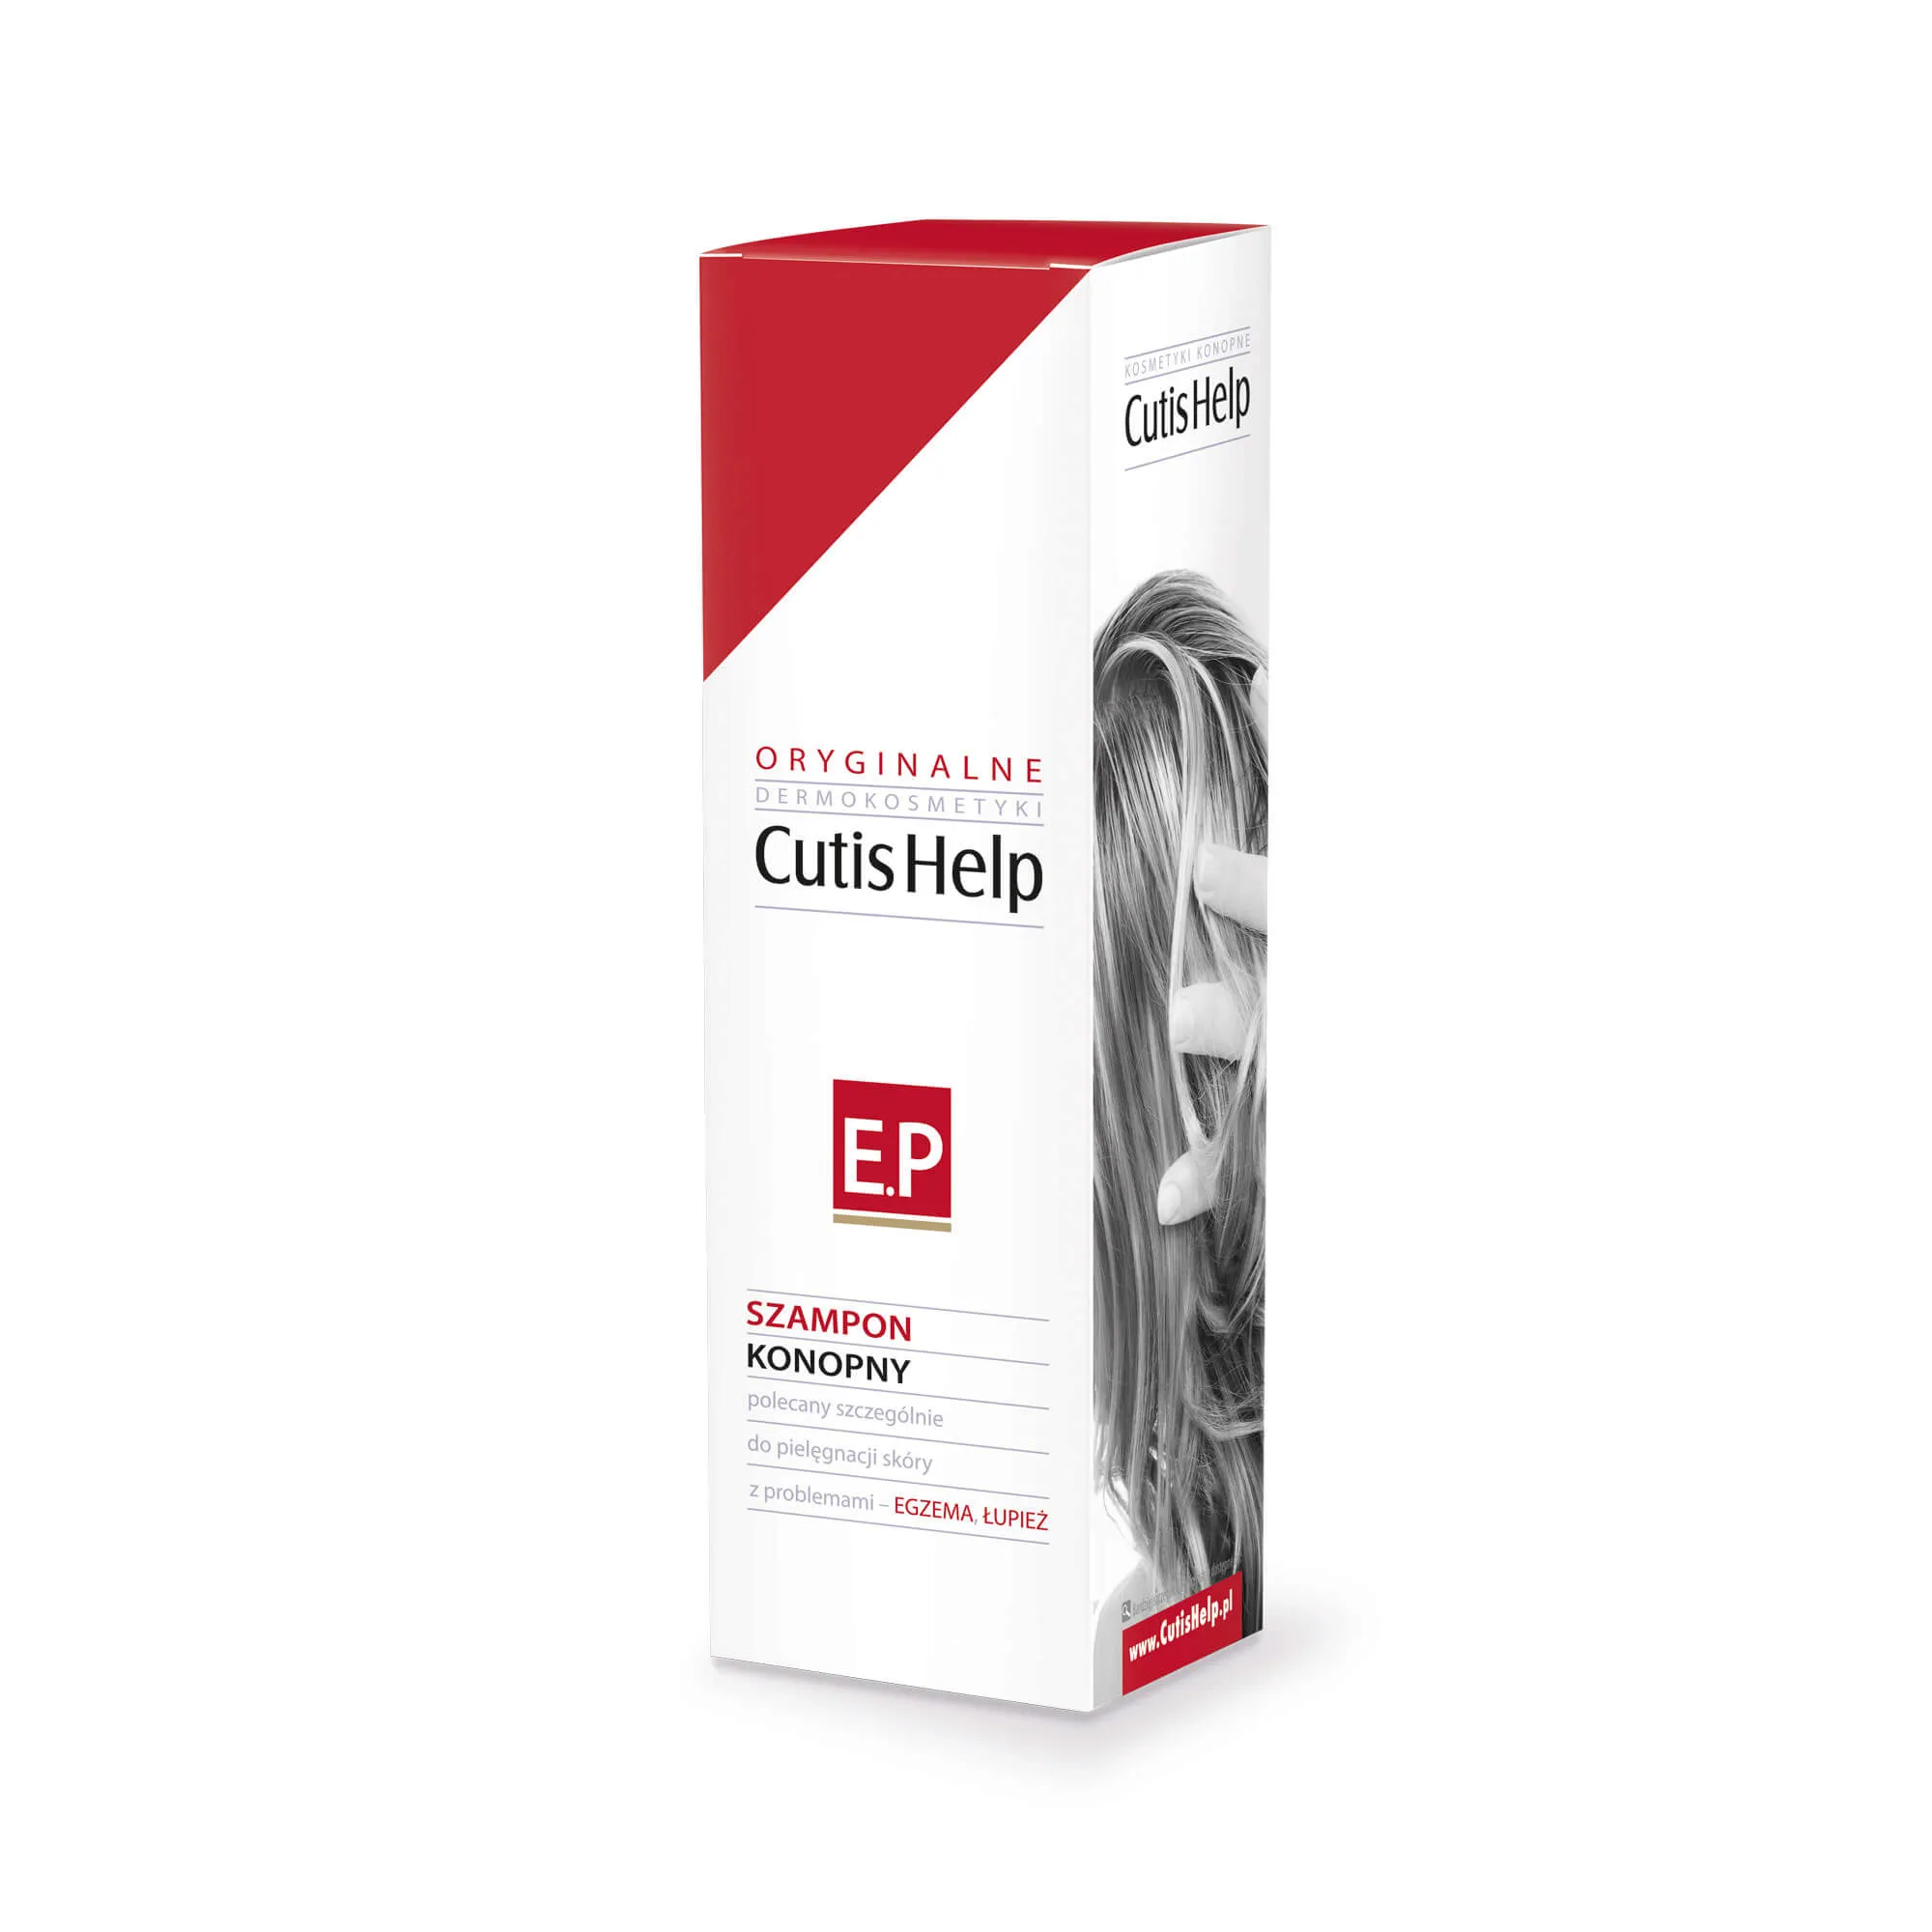 Cutishelp EP, szampon konopny, 200 ml